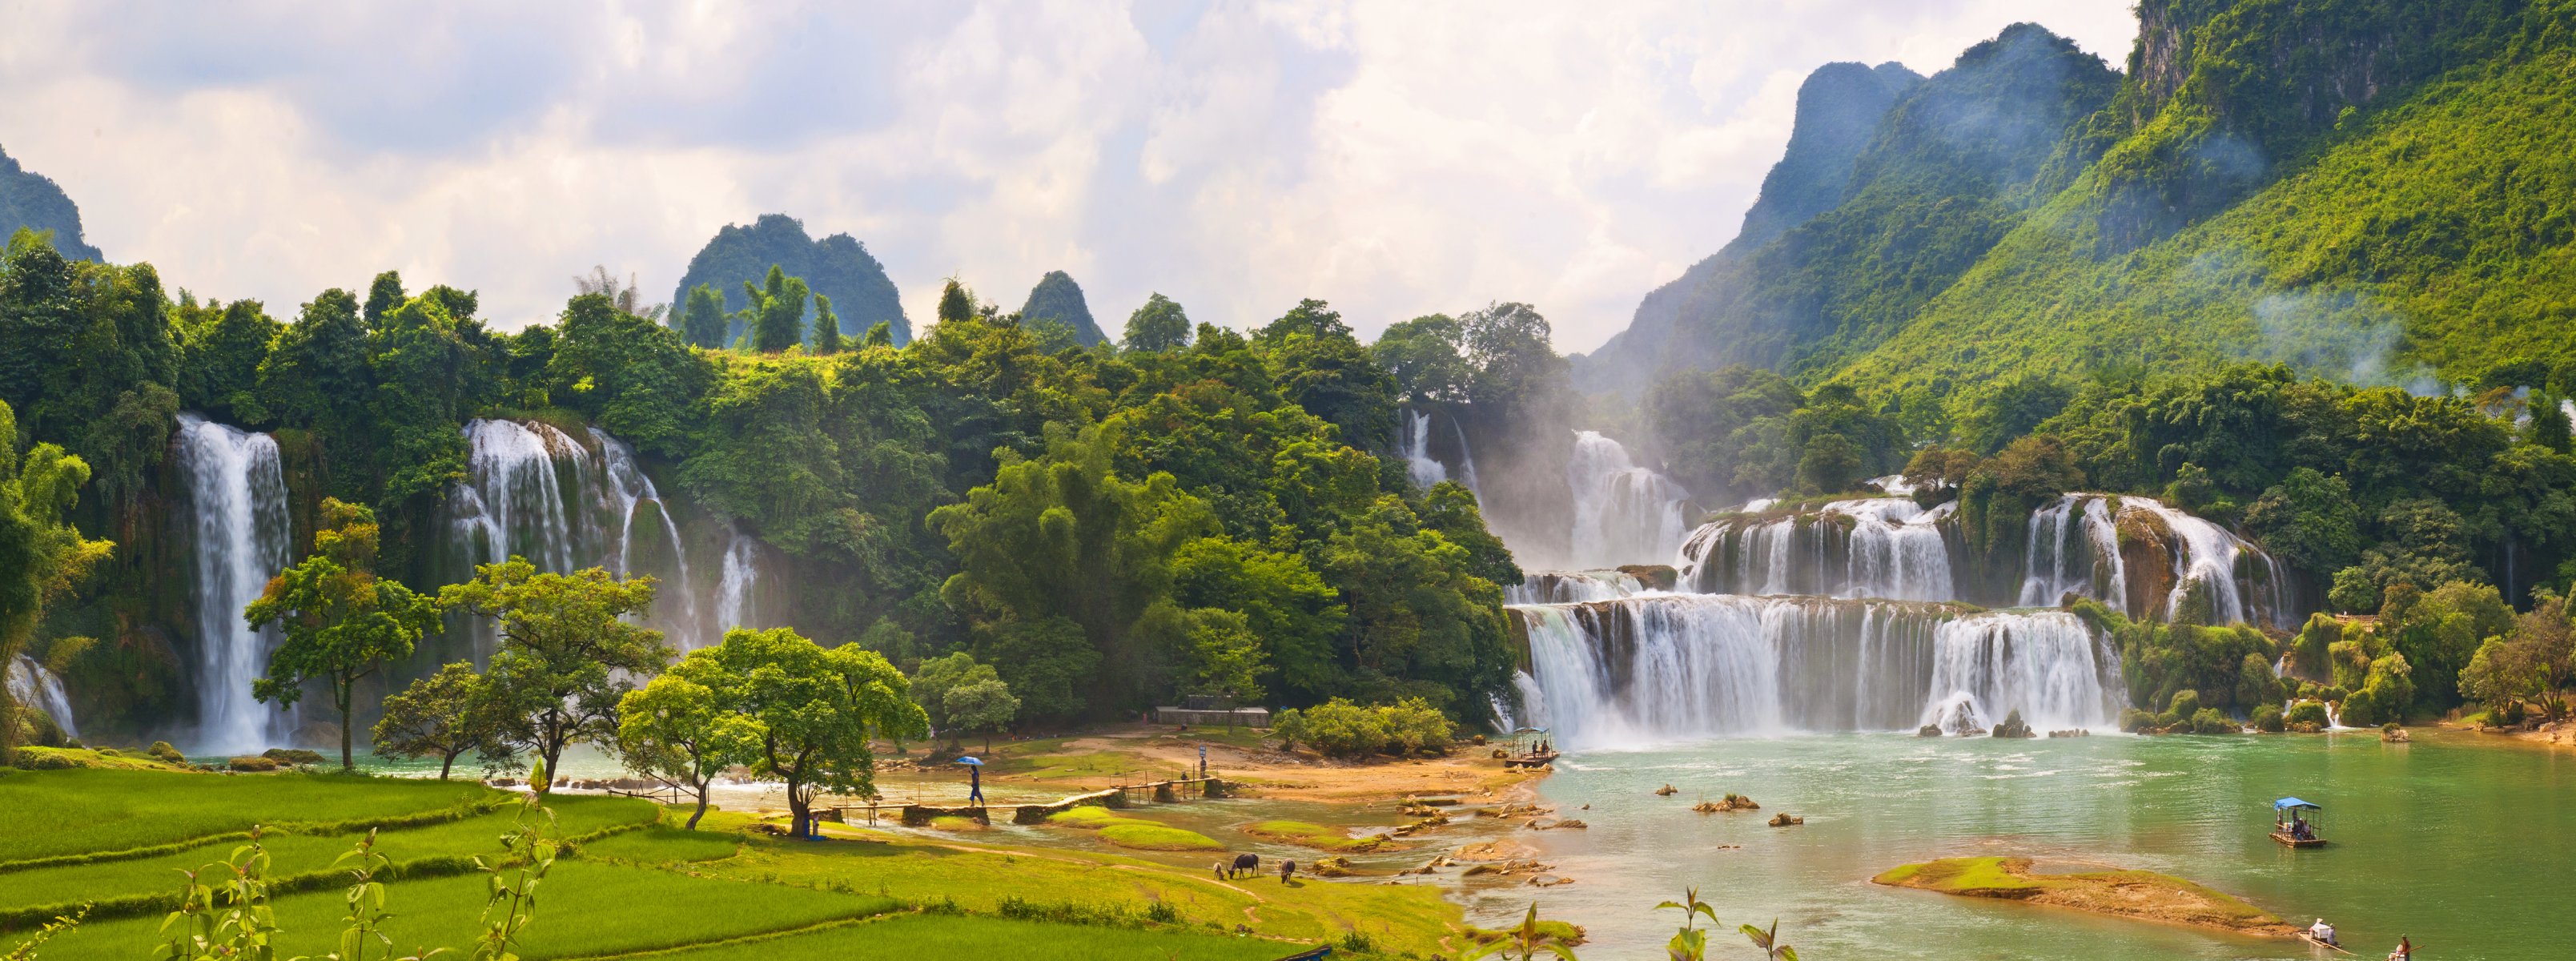 пан gioc водопад вьетнам лао кай аейзаж водопады человек